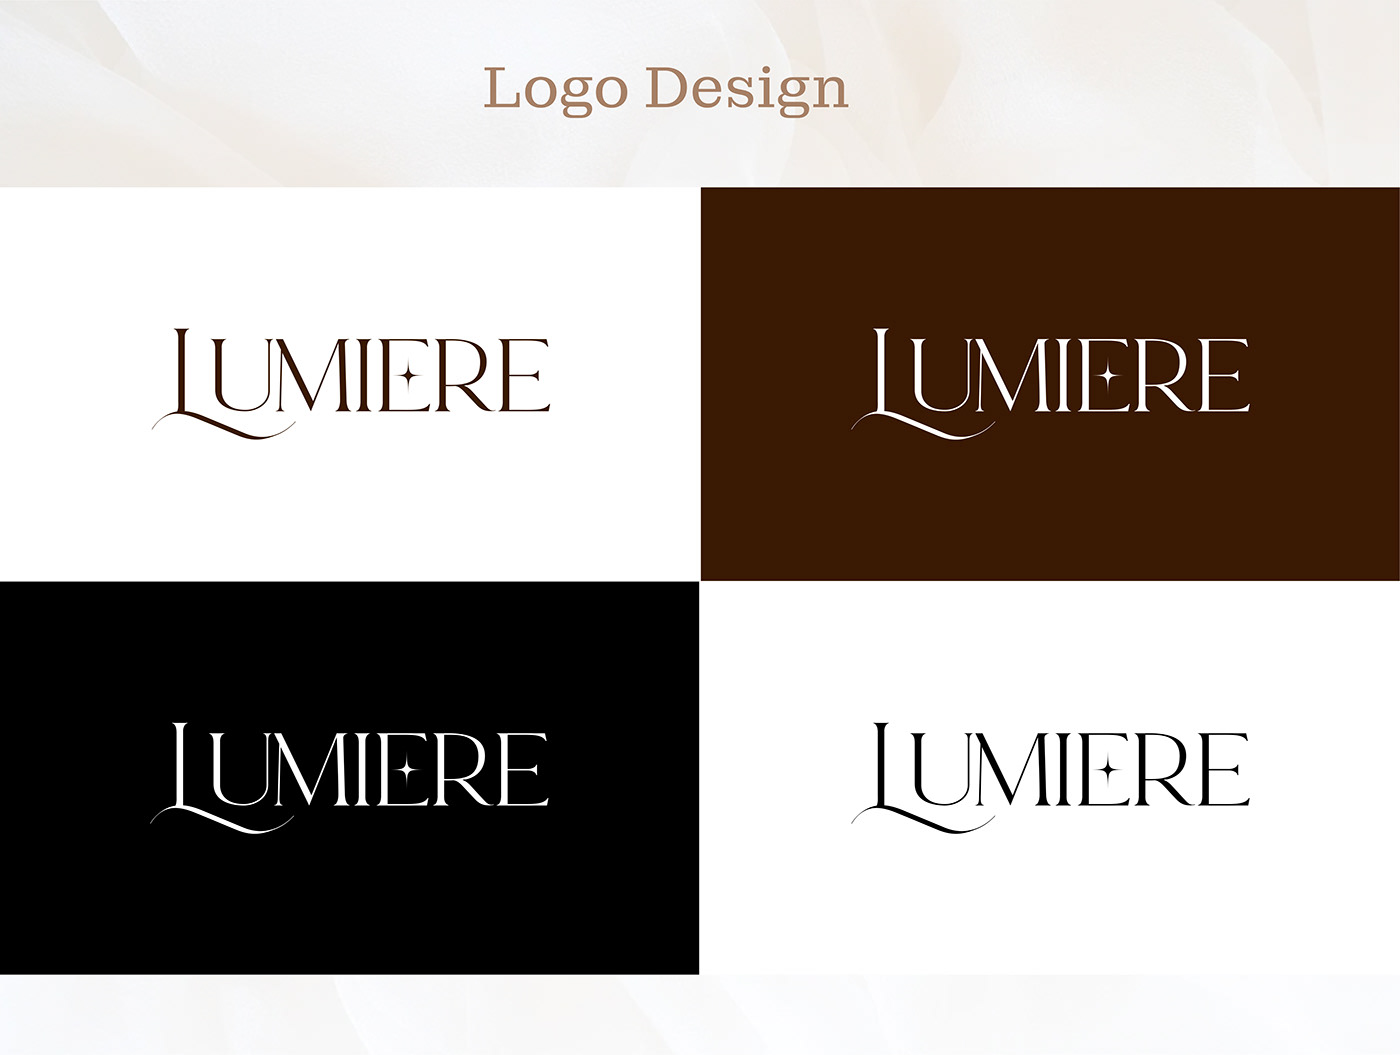 WEDDING DRESS bride e-commerce Website ui design UI/UX design brand identity branding  logo